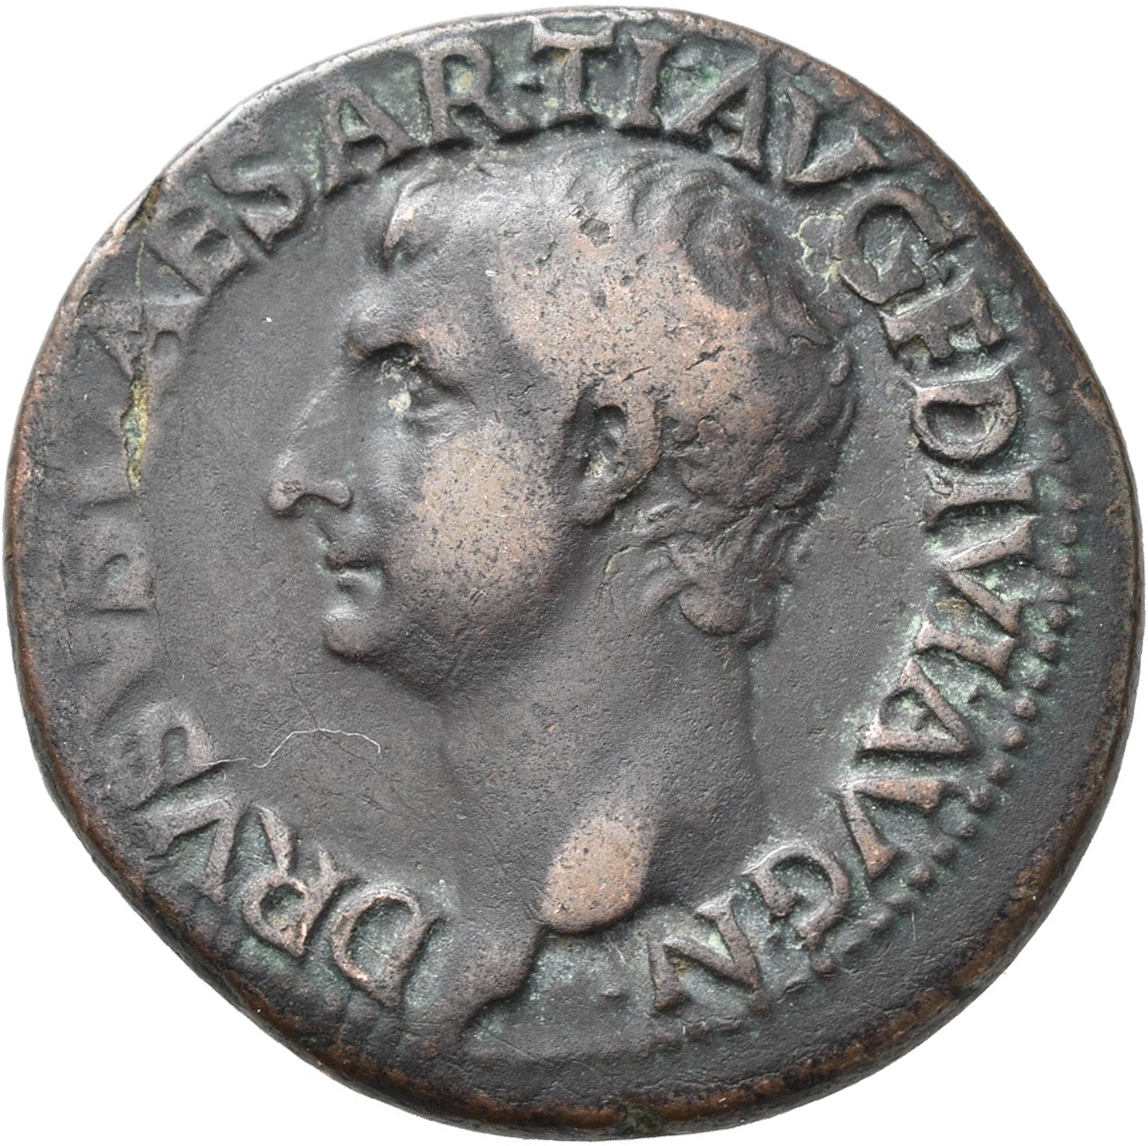 Lot 13006 - Drusus Minor (+ 23 n.Chr.) | Antike - Rom - Kaiserzeit  -  Auktionshaus Christoph Gärtner GmbH & Co. KG 53rd AUCTION - Day 6 Coins/Banknotes